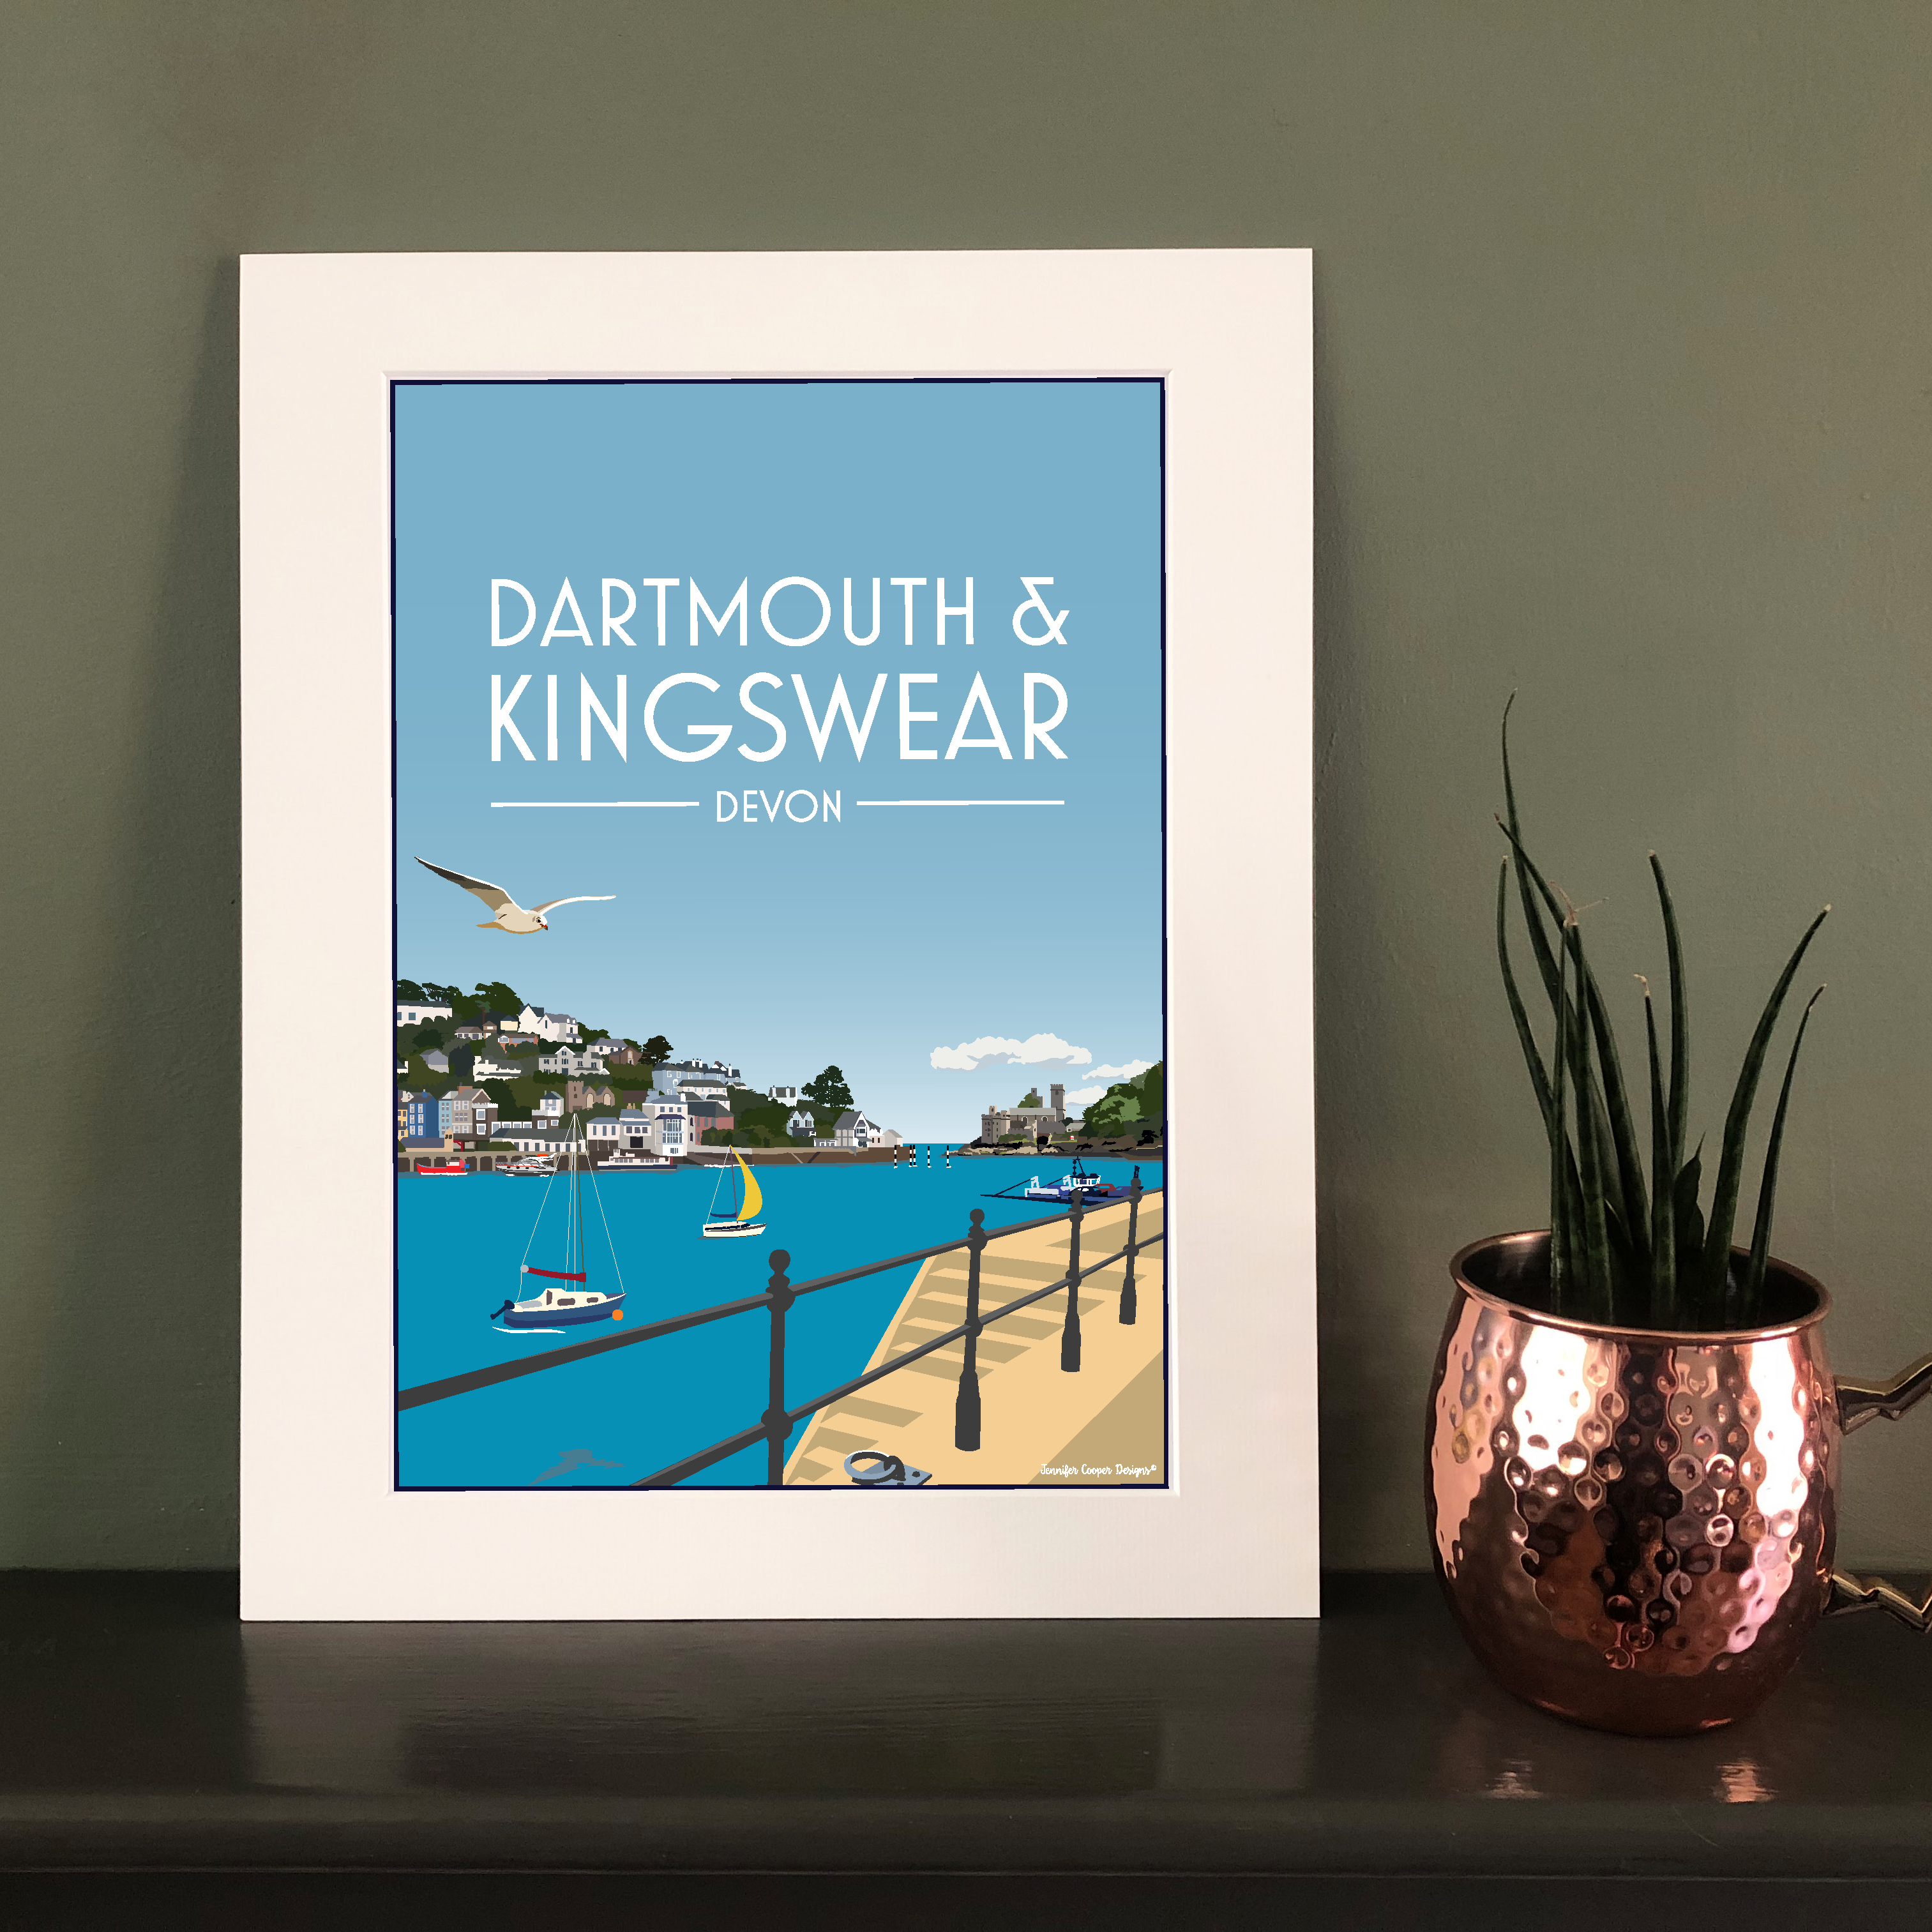 Kingswear and Dartmouth